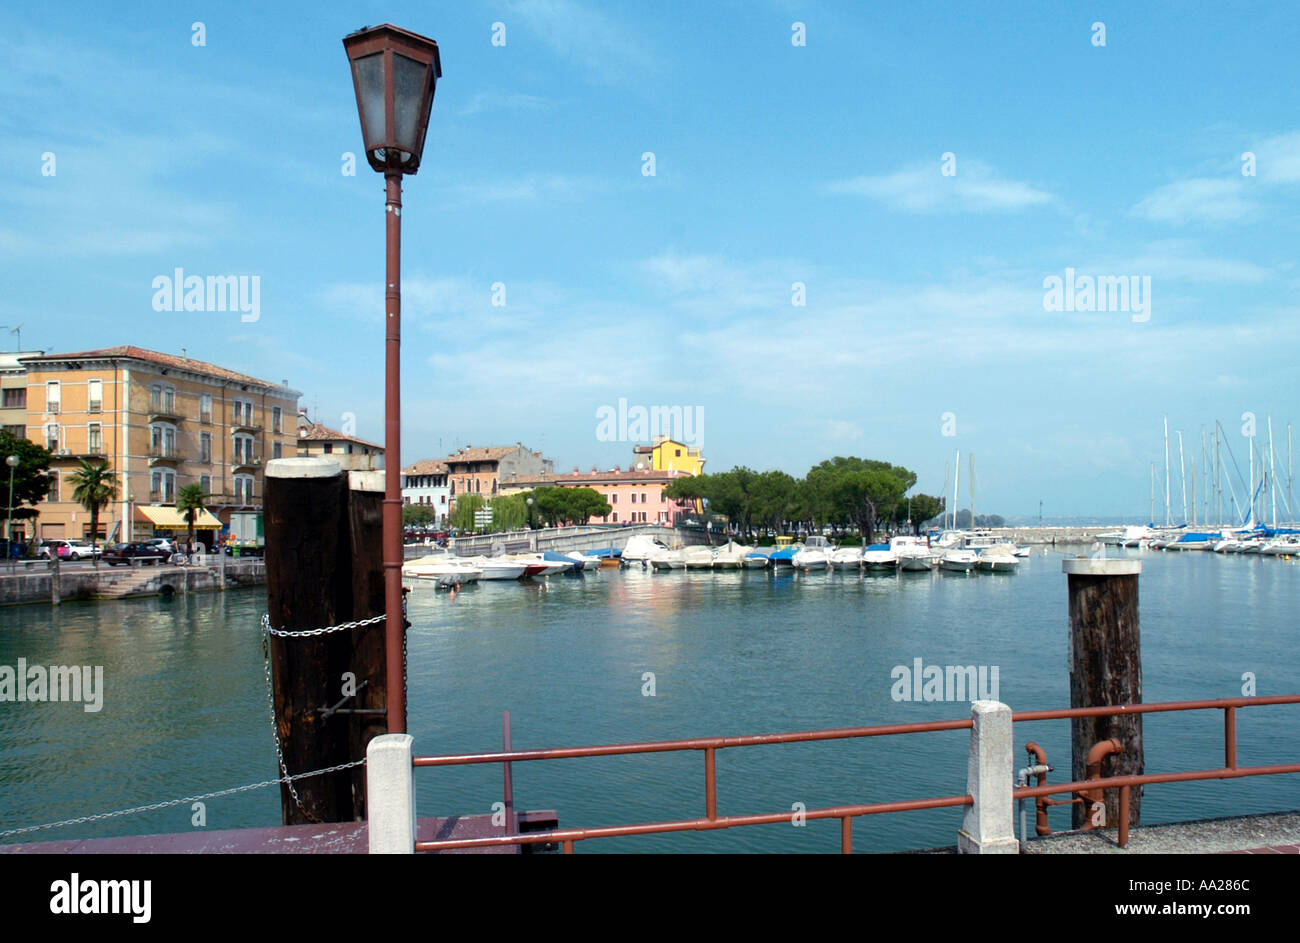 Soft focus shot of the harbour in Desenzan, Lake Garda, Italy Stock Photo